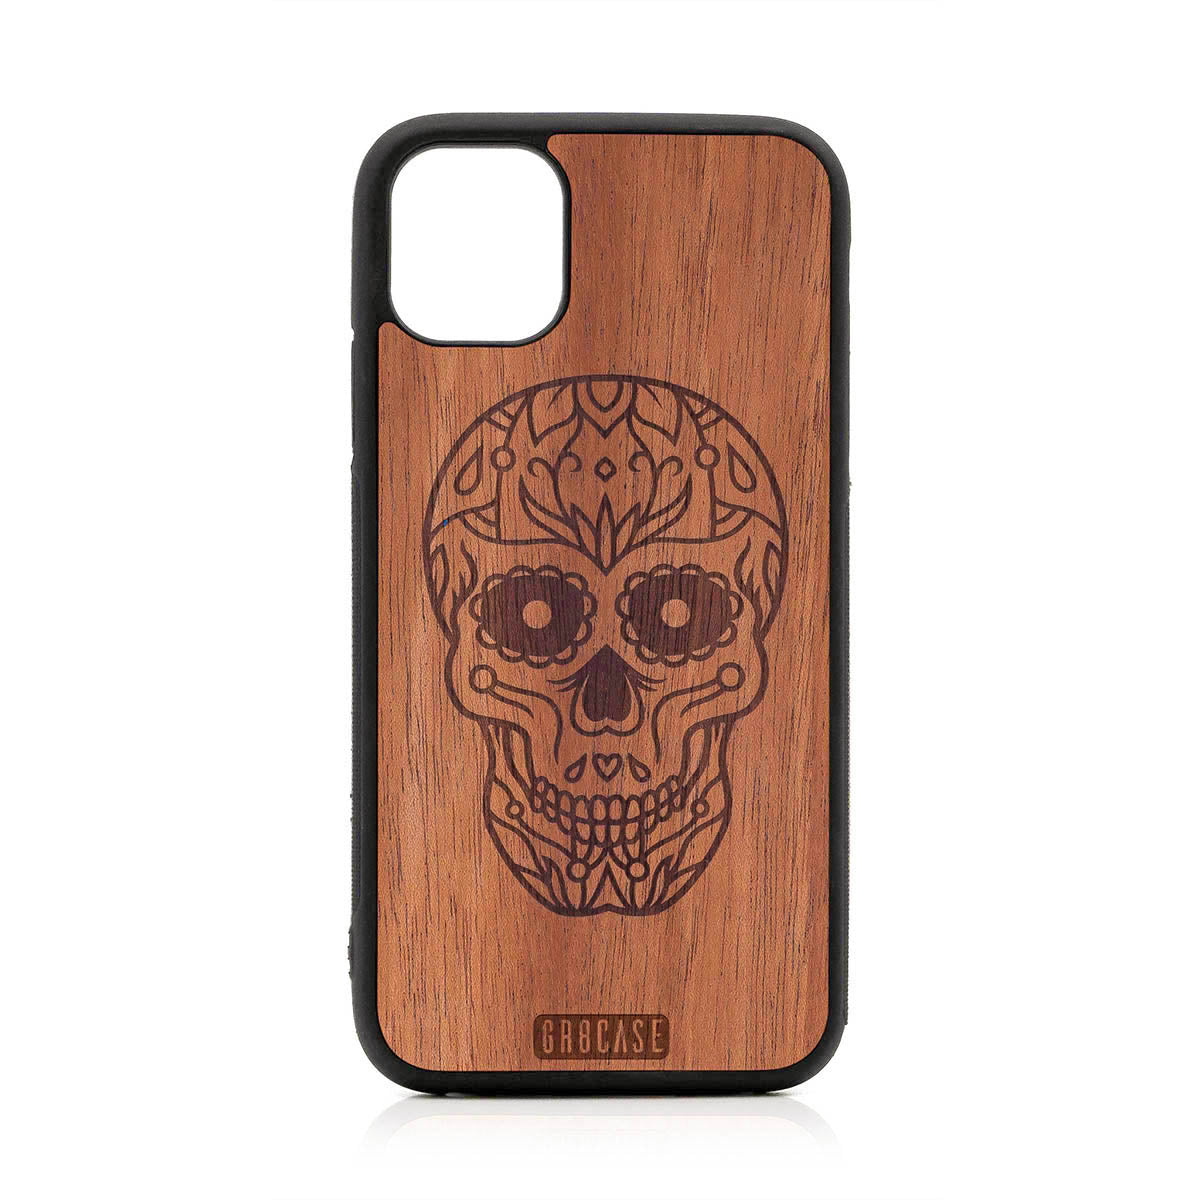 Sugar Skull Design Wood Case For iPhone 11 by GR8CASE